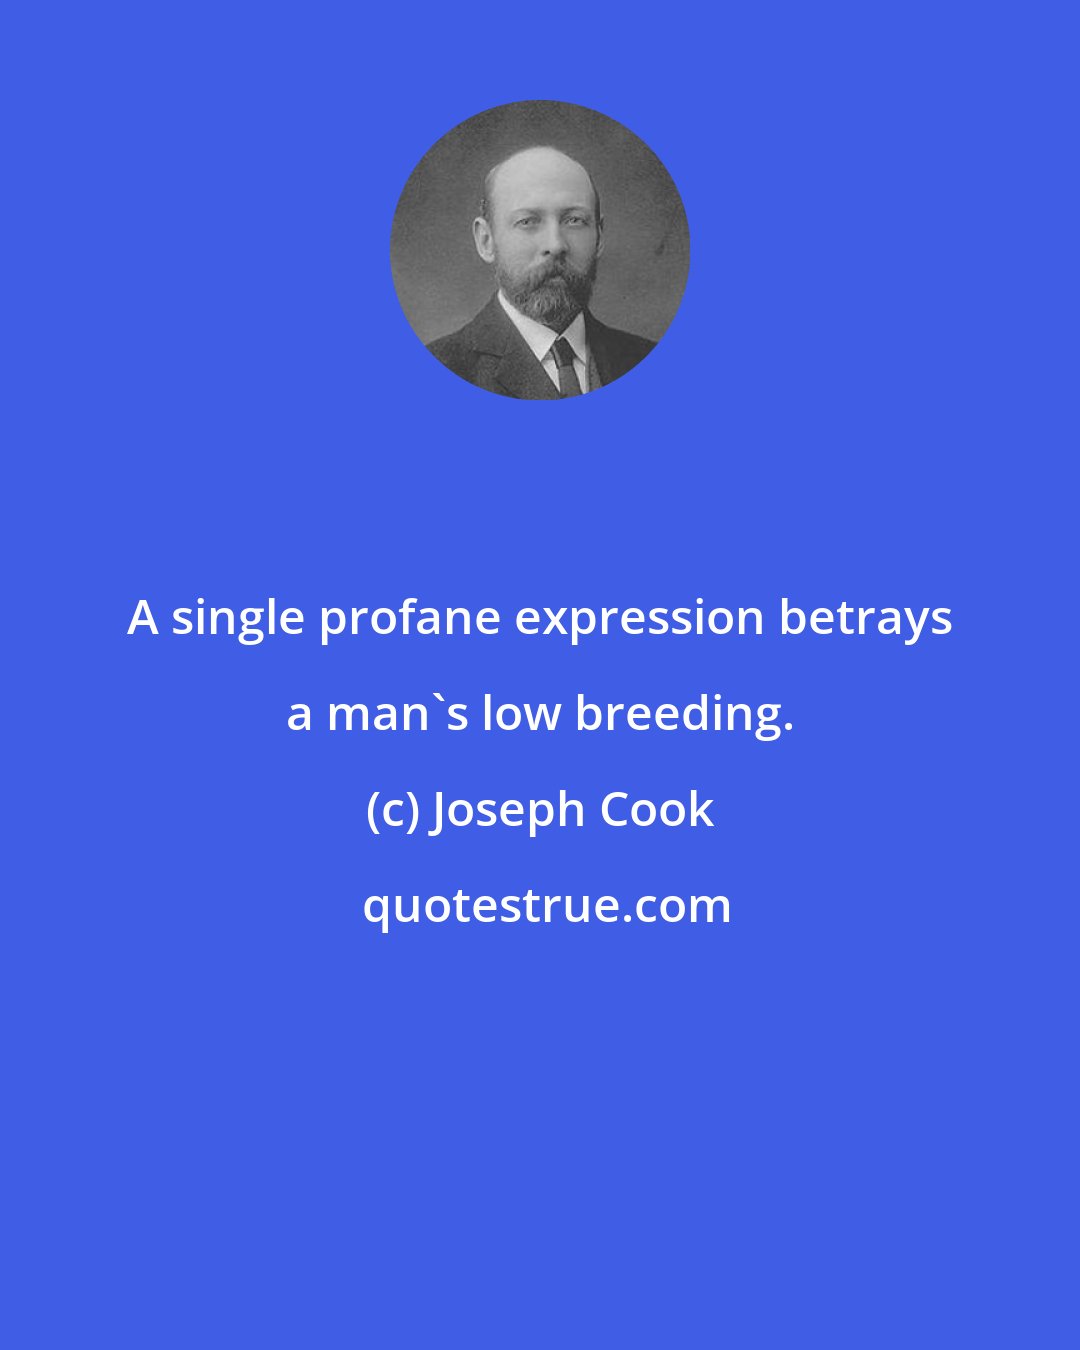 Joseph Cook: A single profane expression betrays a man's low breeding.